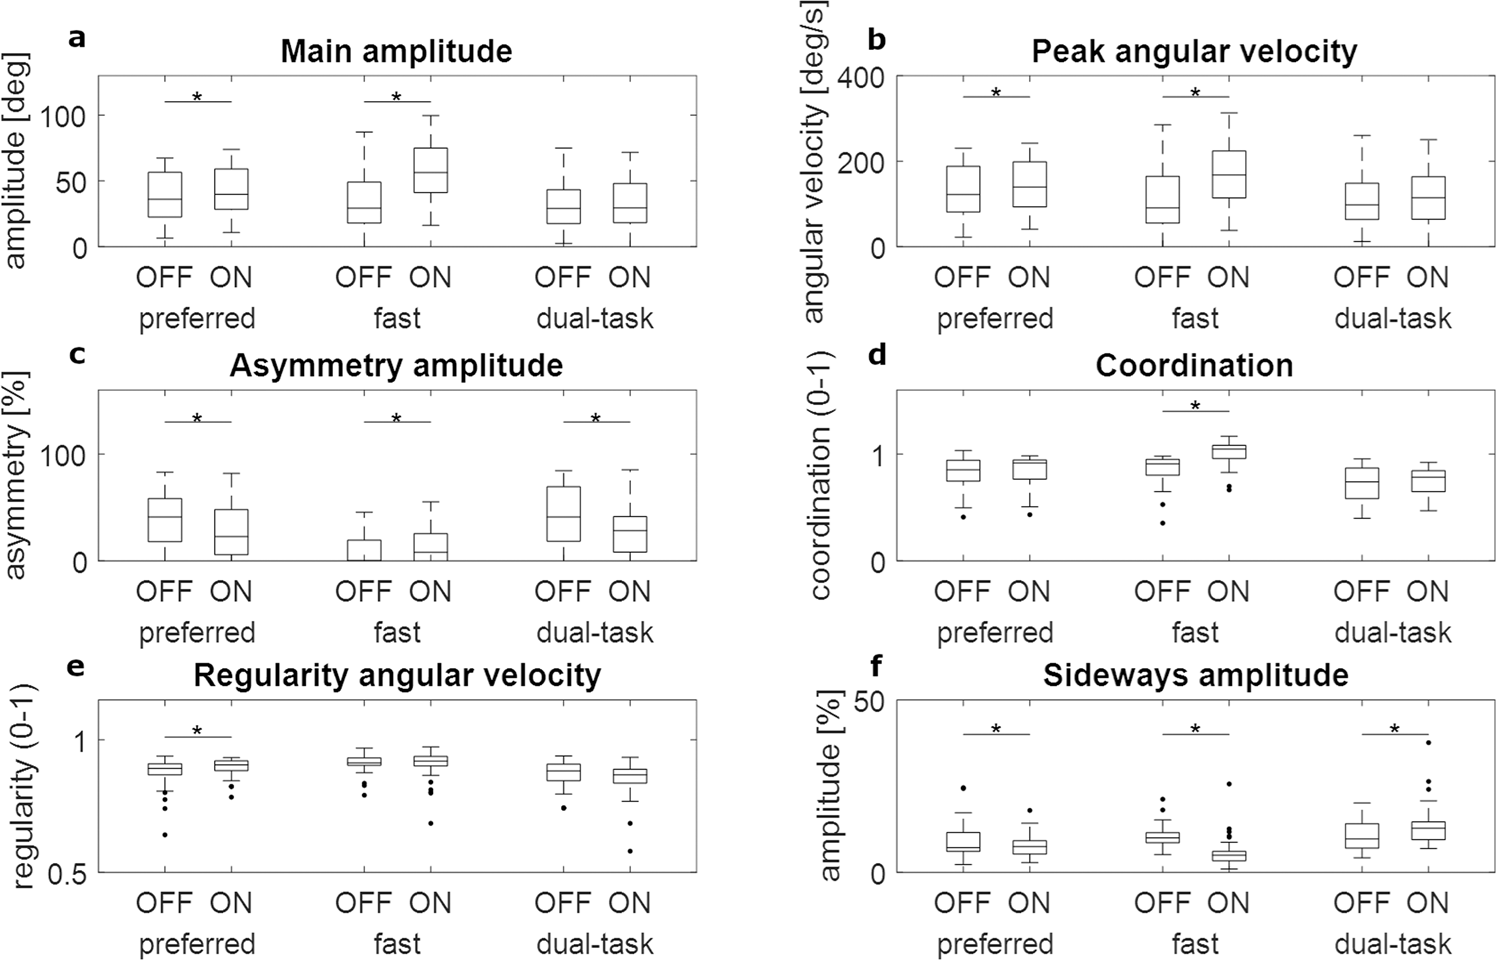 Arm swing responsiveness to dopaminergic medication in Parkinson's disease  depends on task complexity | npj Parkinson's Disease